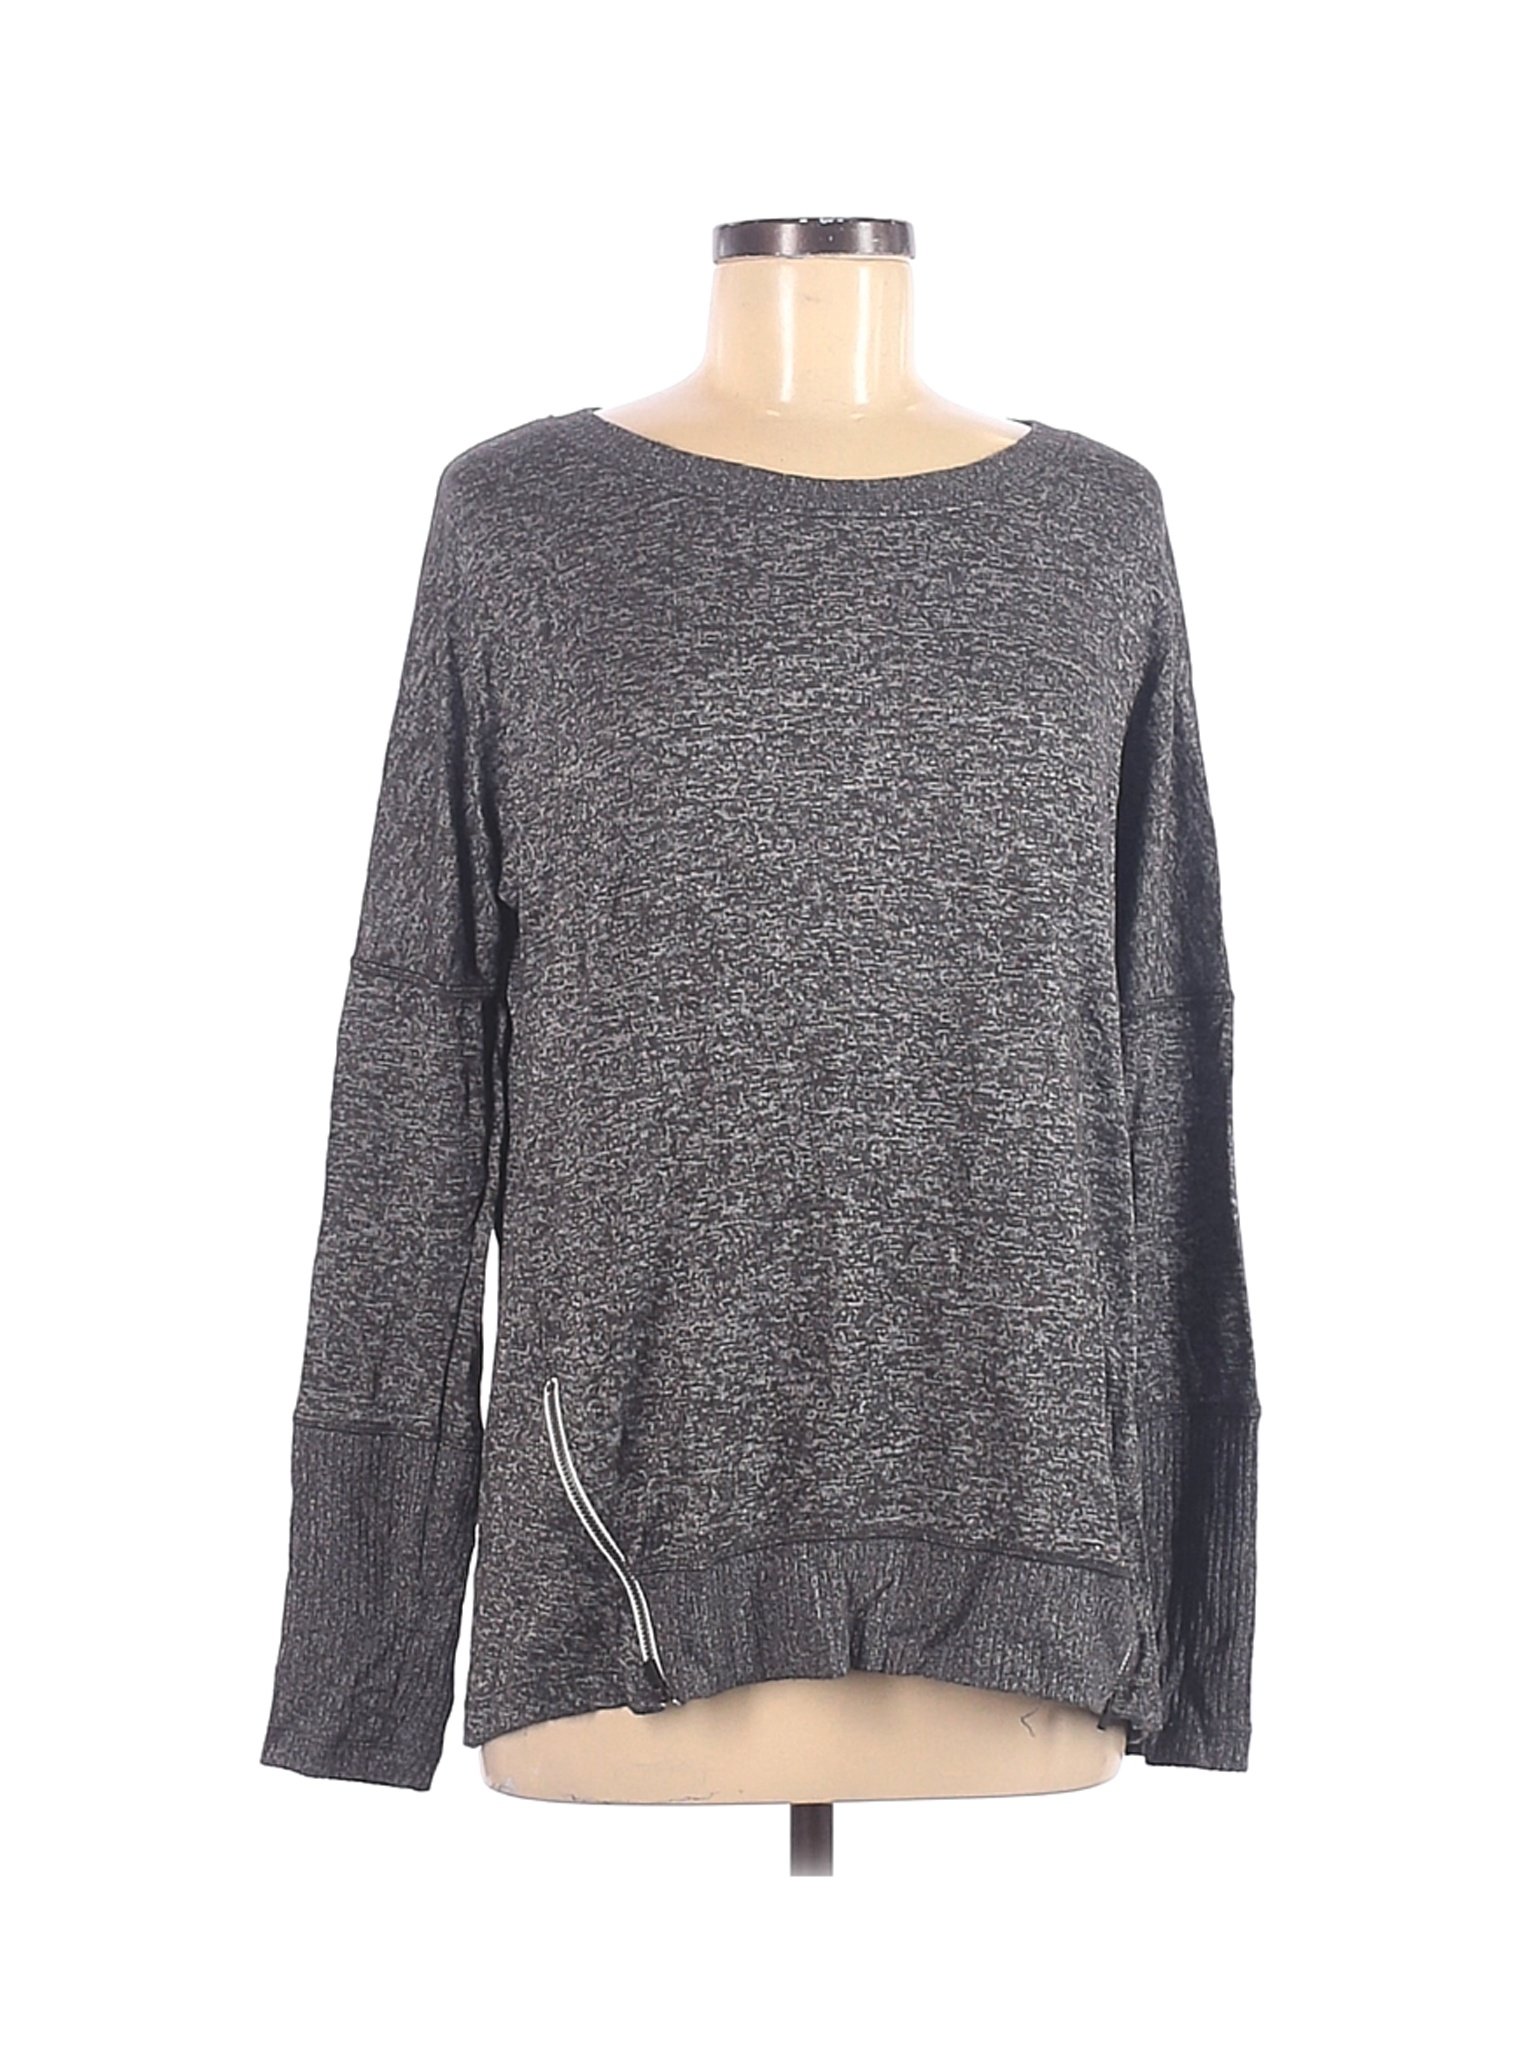 Danskin Now Women Gray Pullover Sweater M | eBay